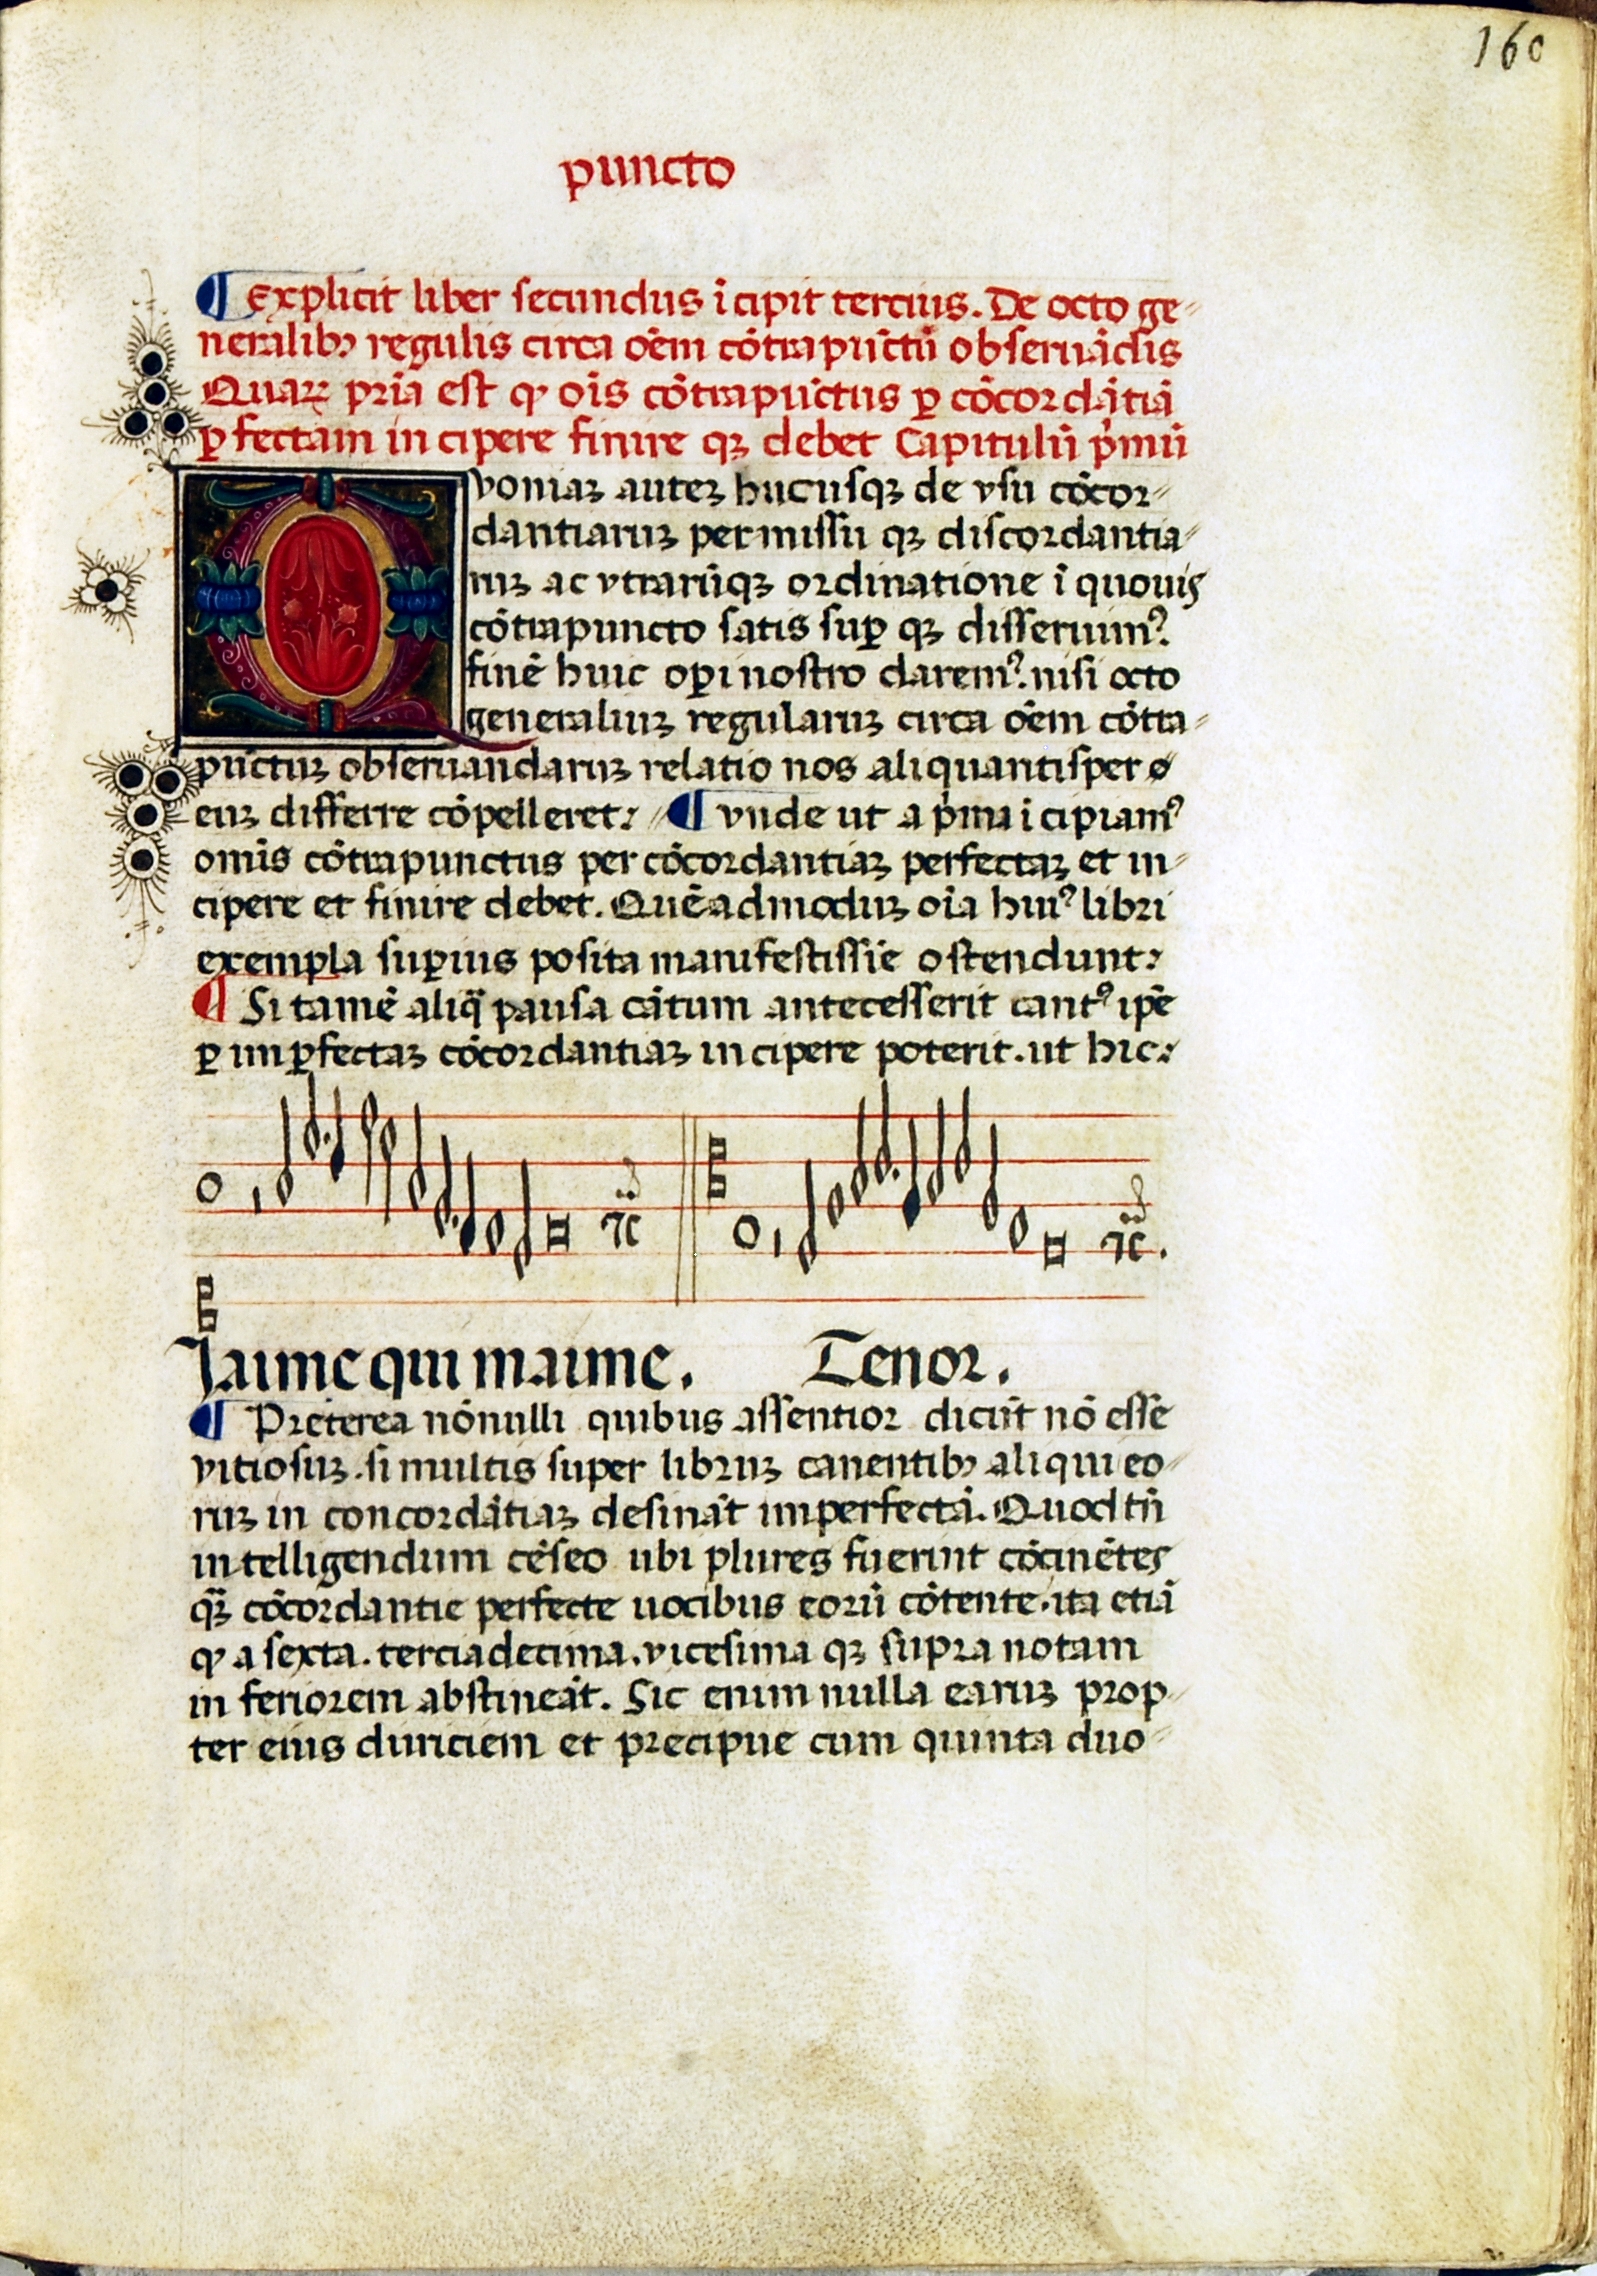 Bologna, Biblioteca Universitaria, MS 2573, fol. 160r. Source: Biblioteca Universitaria, Bologna.